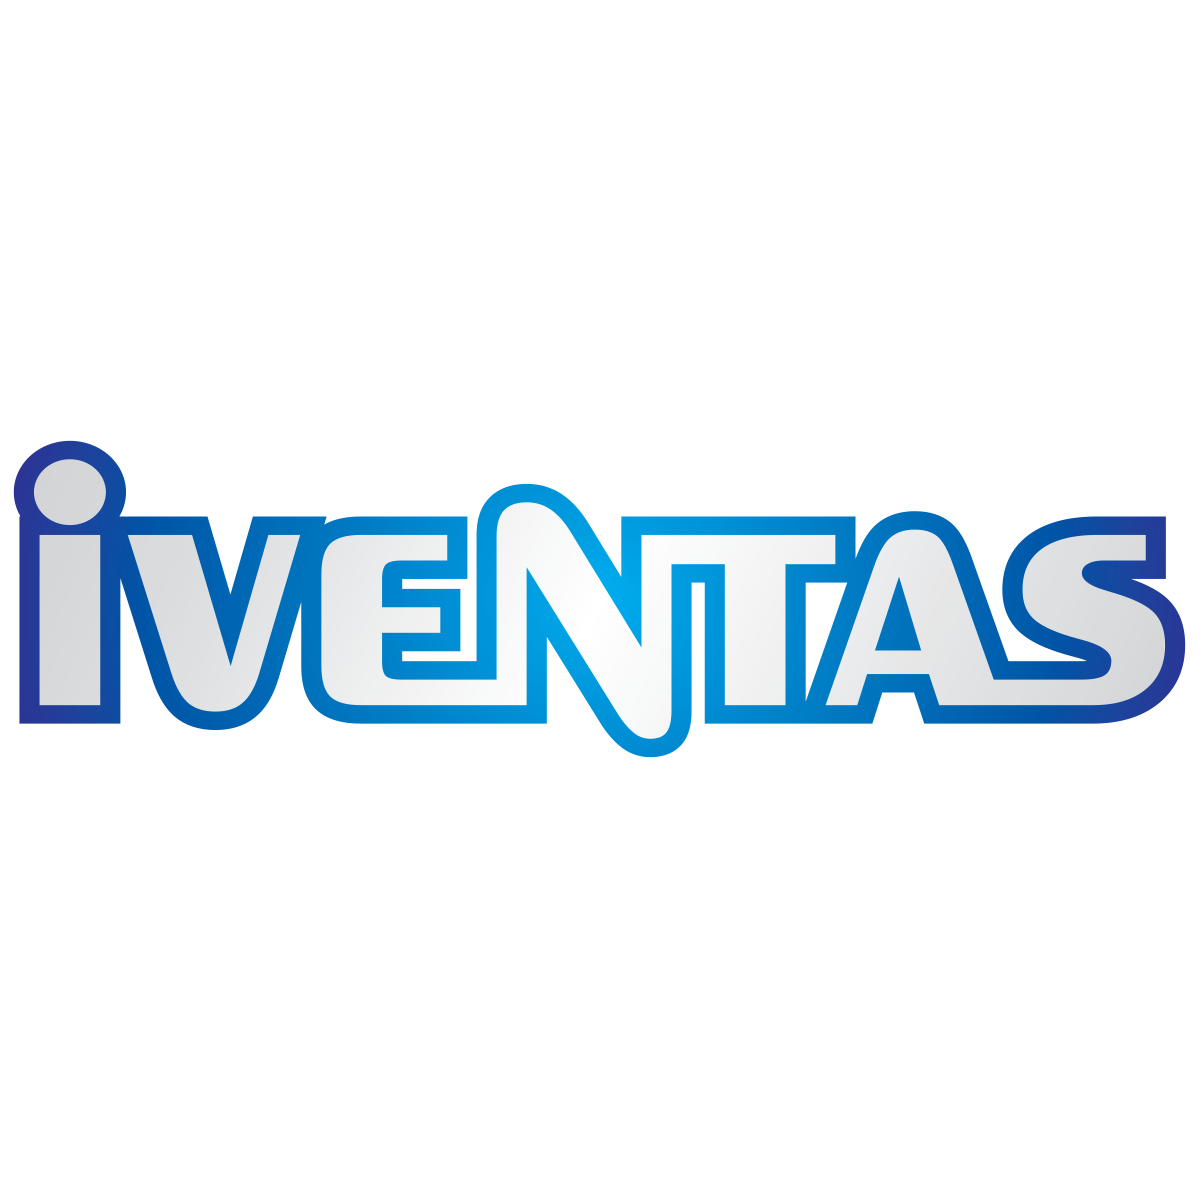 IVENTAS_logo_bial cant.png